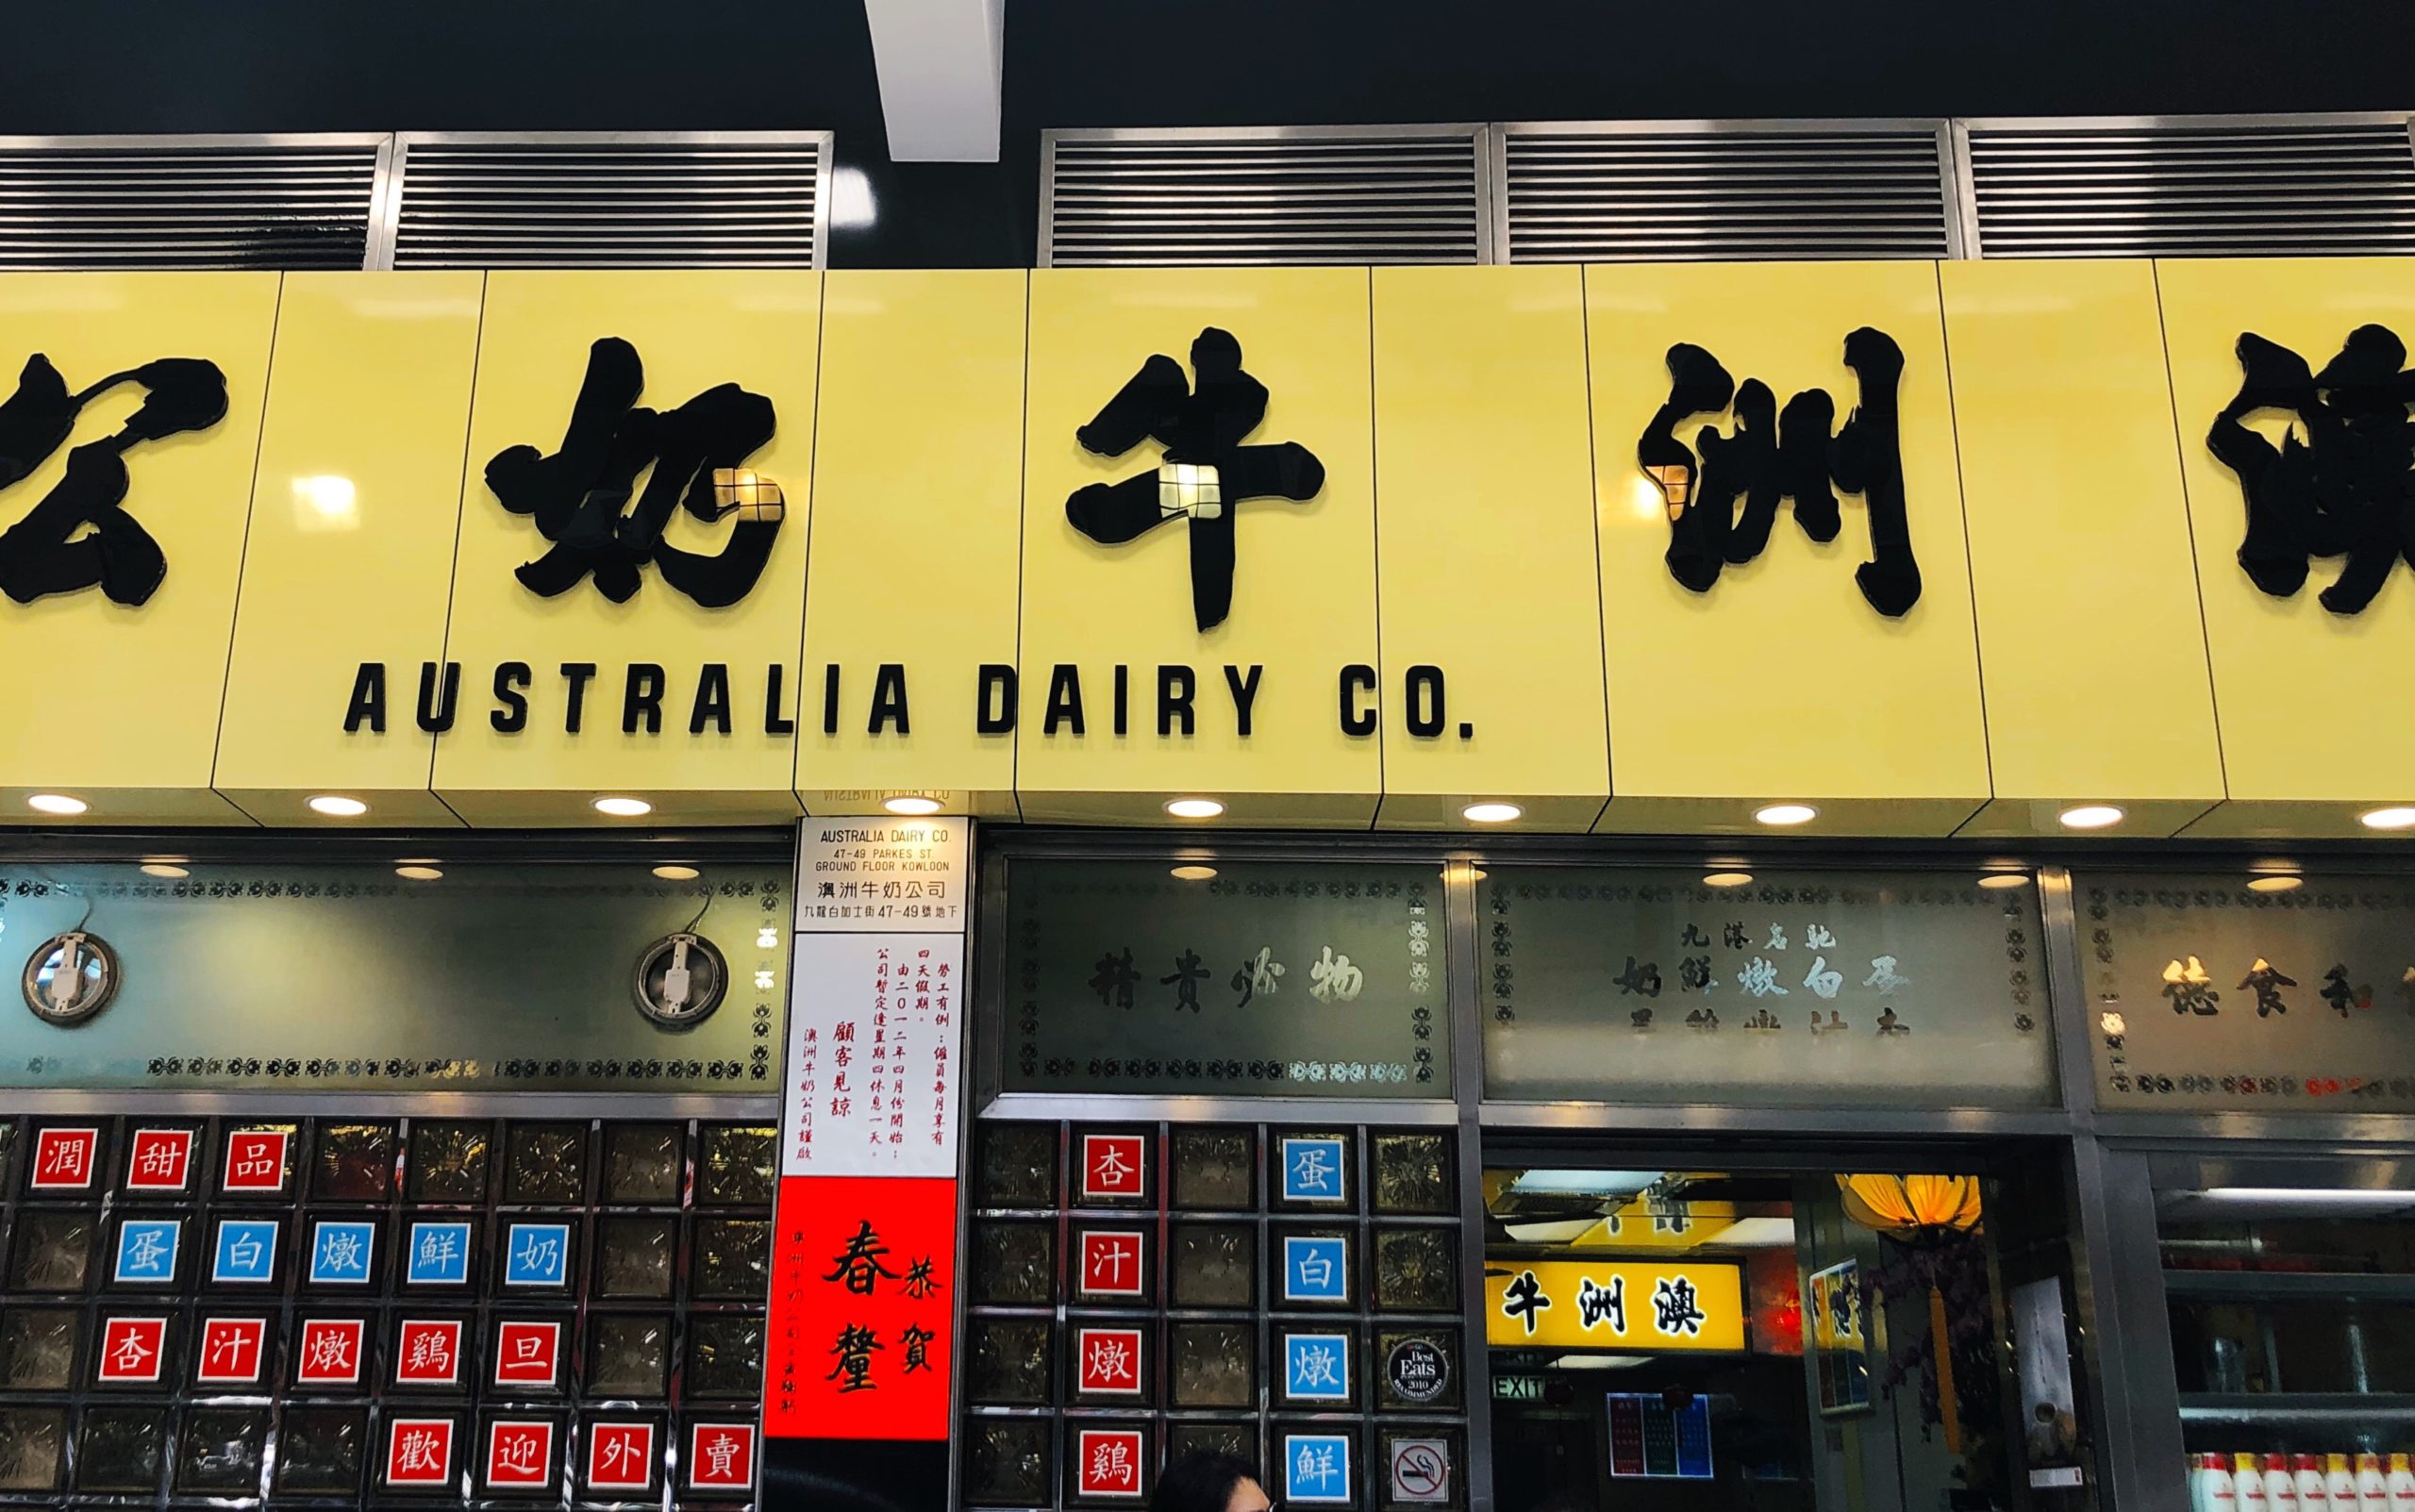 Australia Dairy Co Hong Kong Restaurant Sign